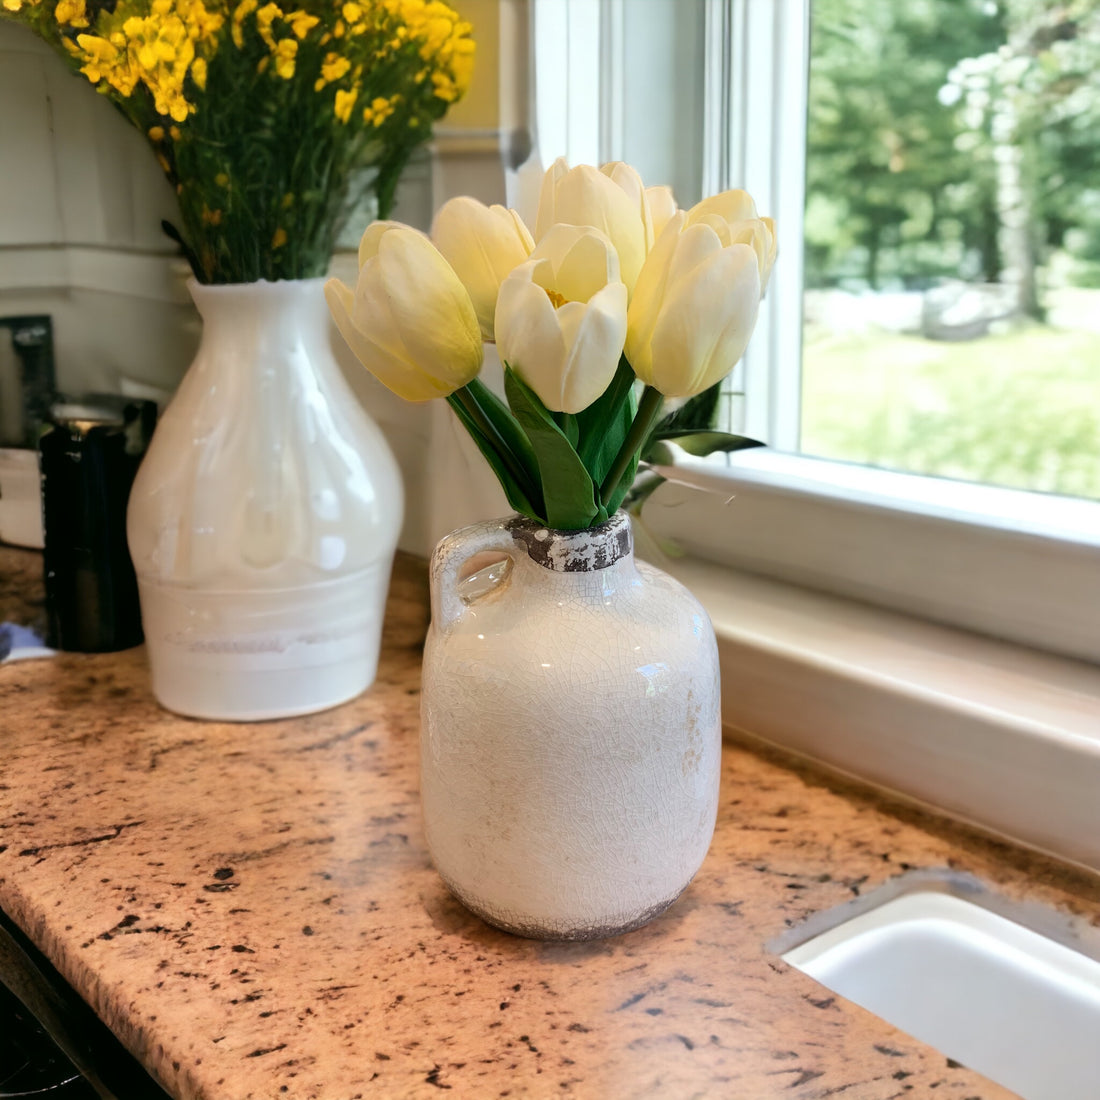 Tulips in White Jug Vase Arrangement